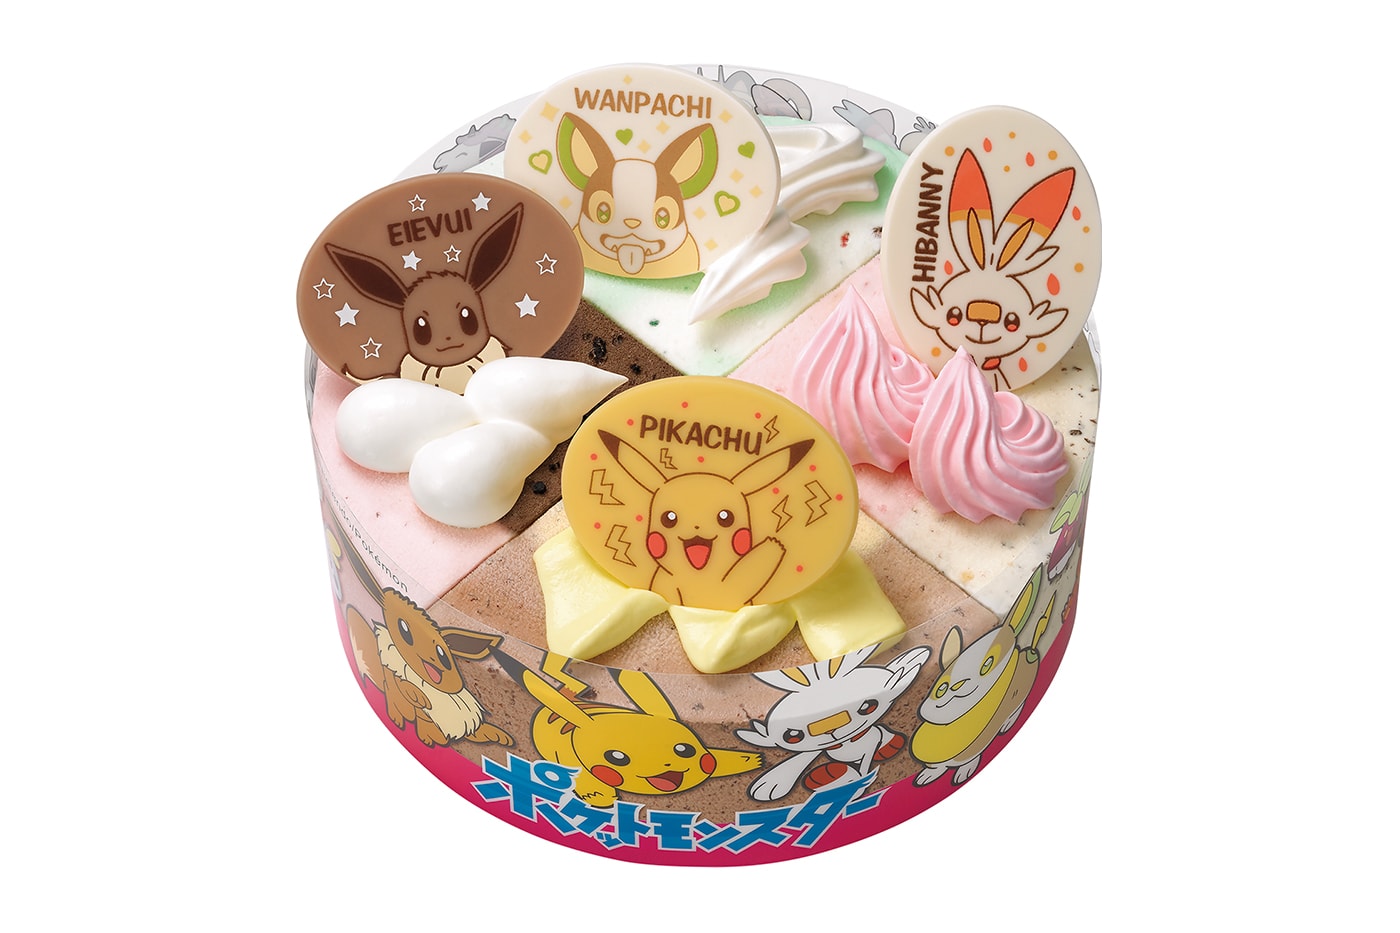 Baskin Robbins 31 Pokemon Summer! Campaign info Japan Ice cream desserts 